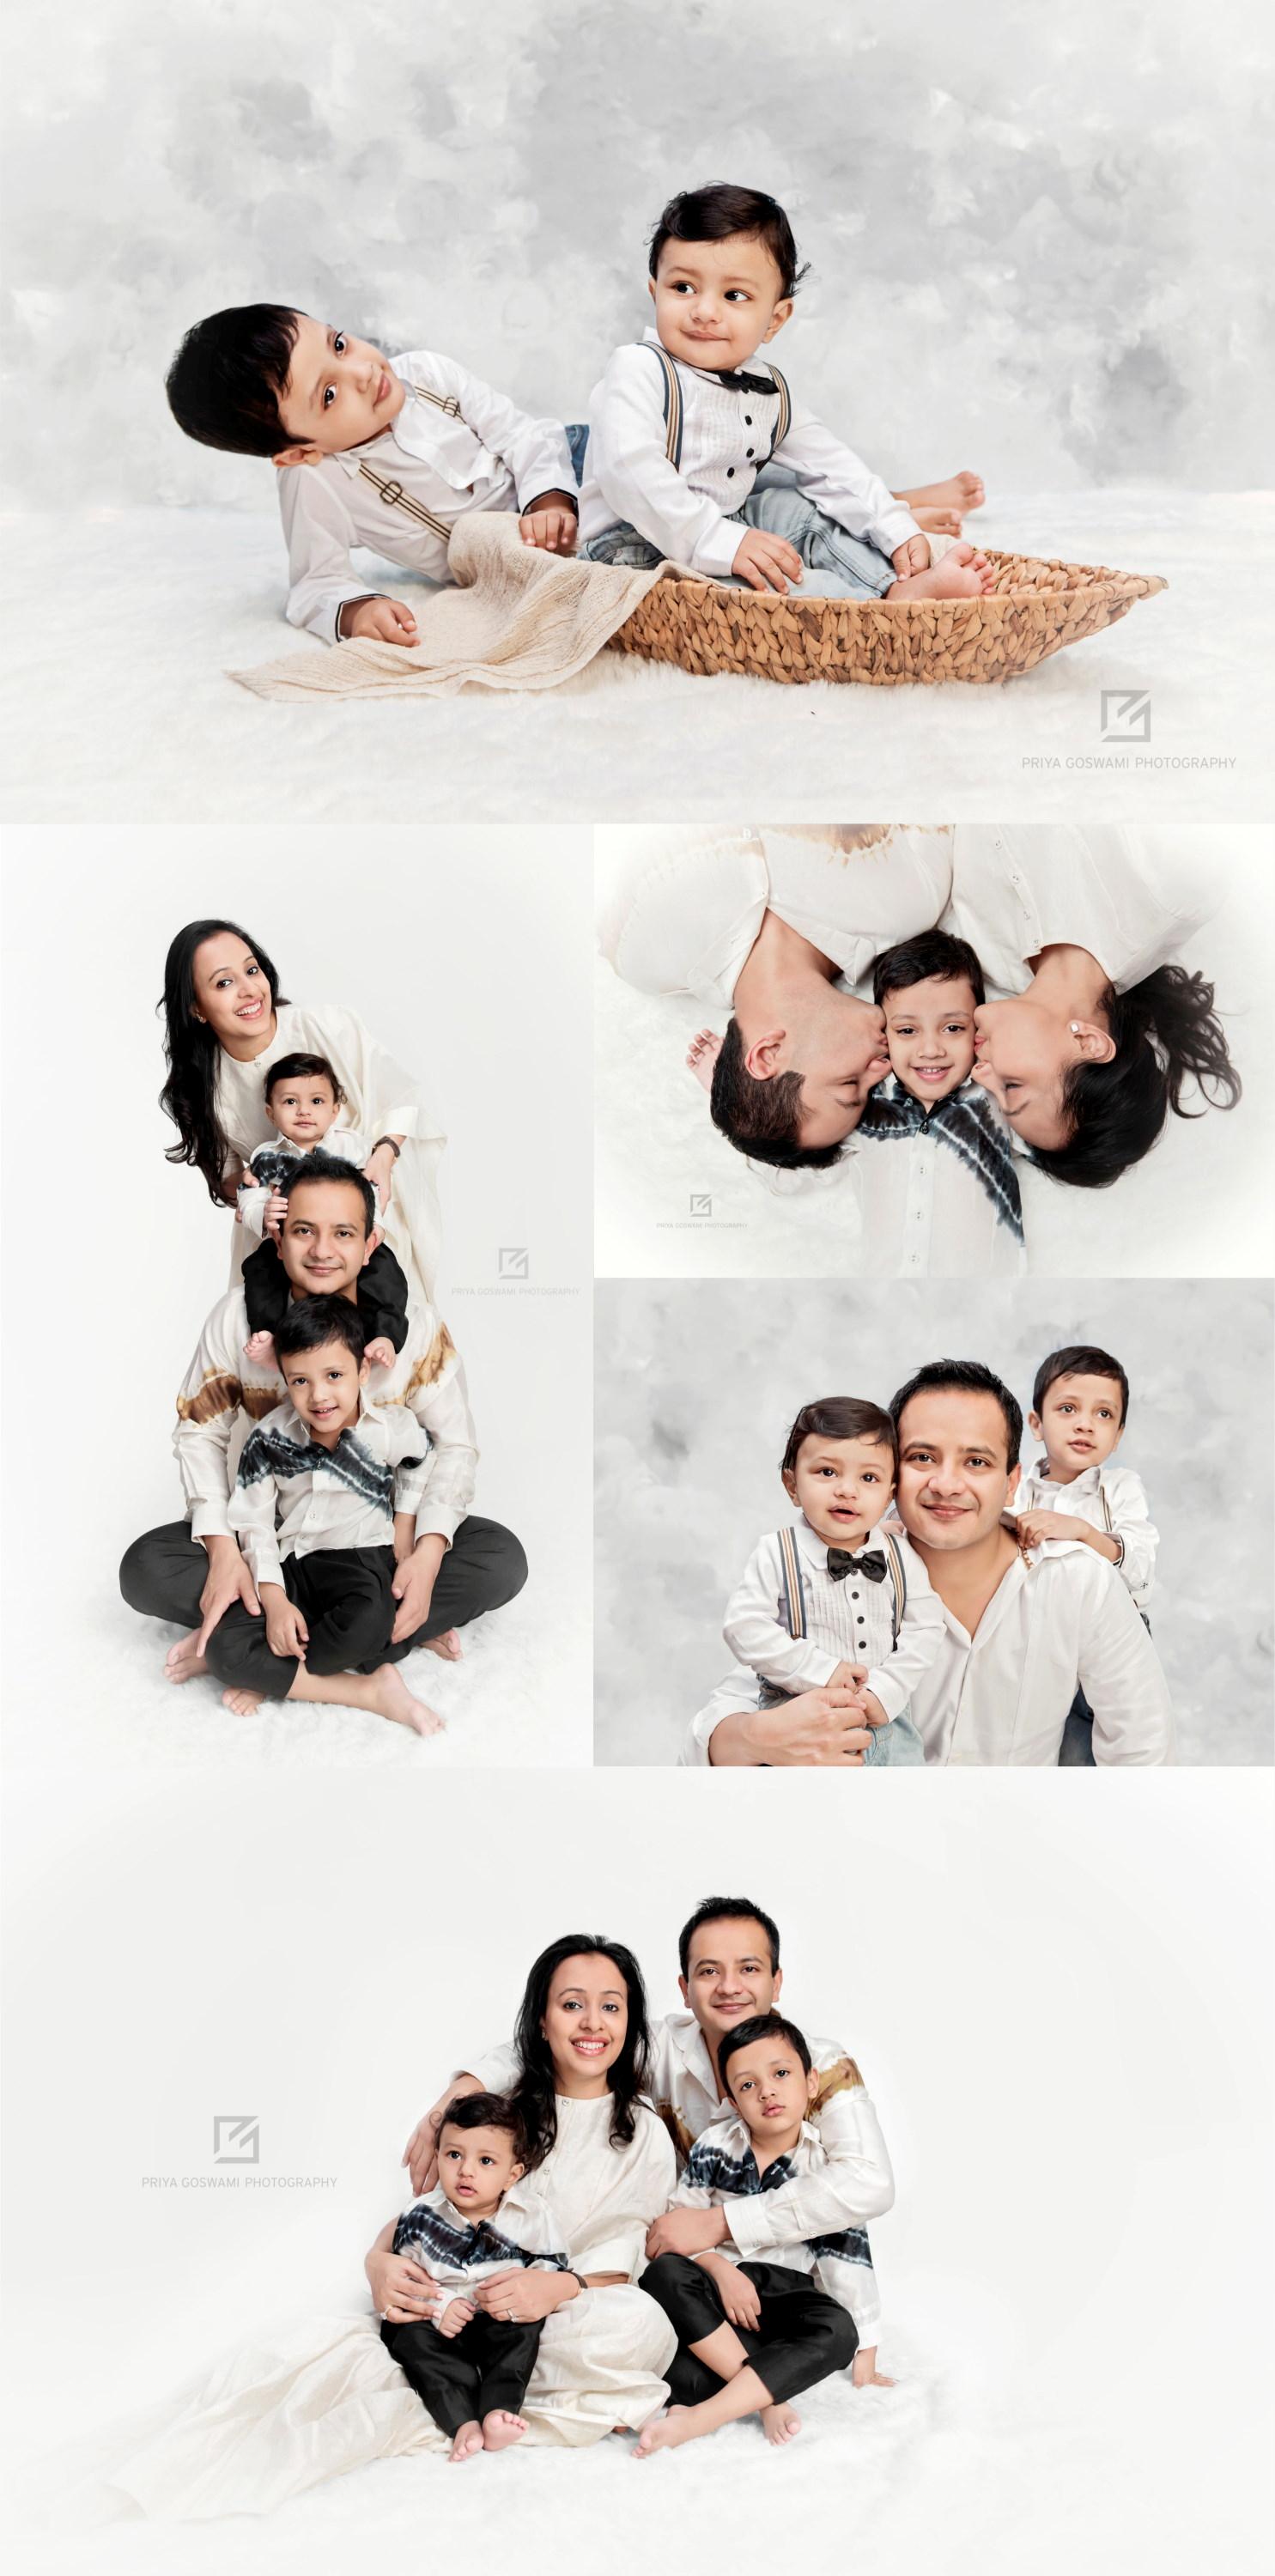 Gupta Family Portraits Shoot at Home